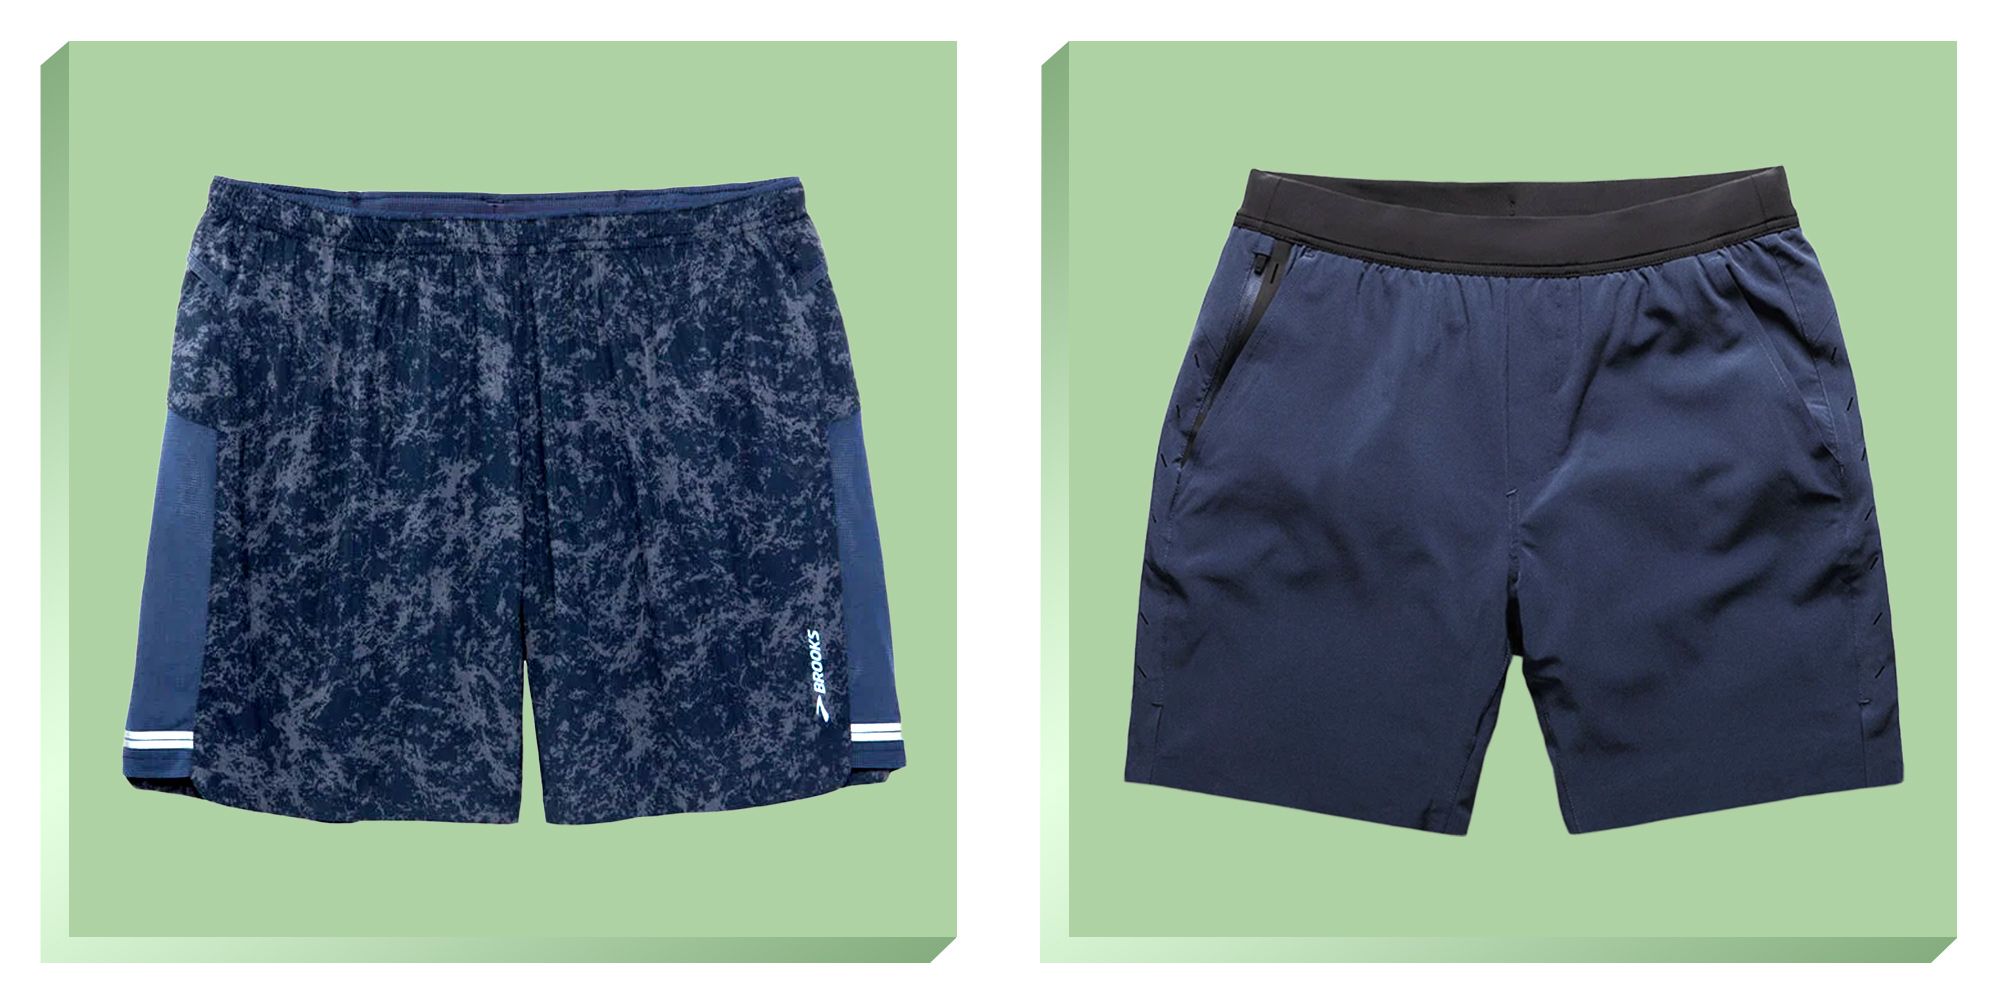 adidas running shorts zip pockets